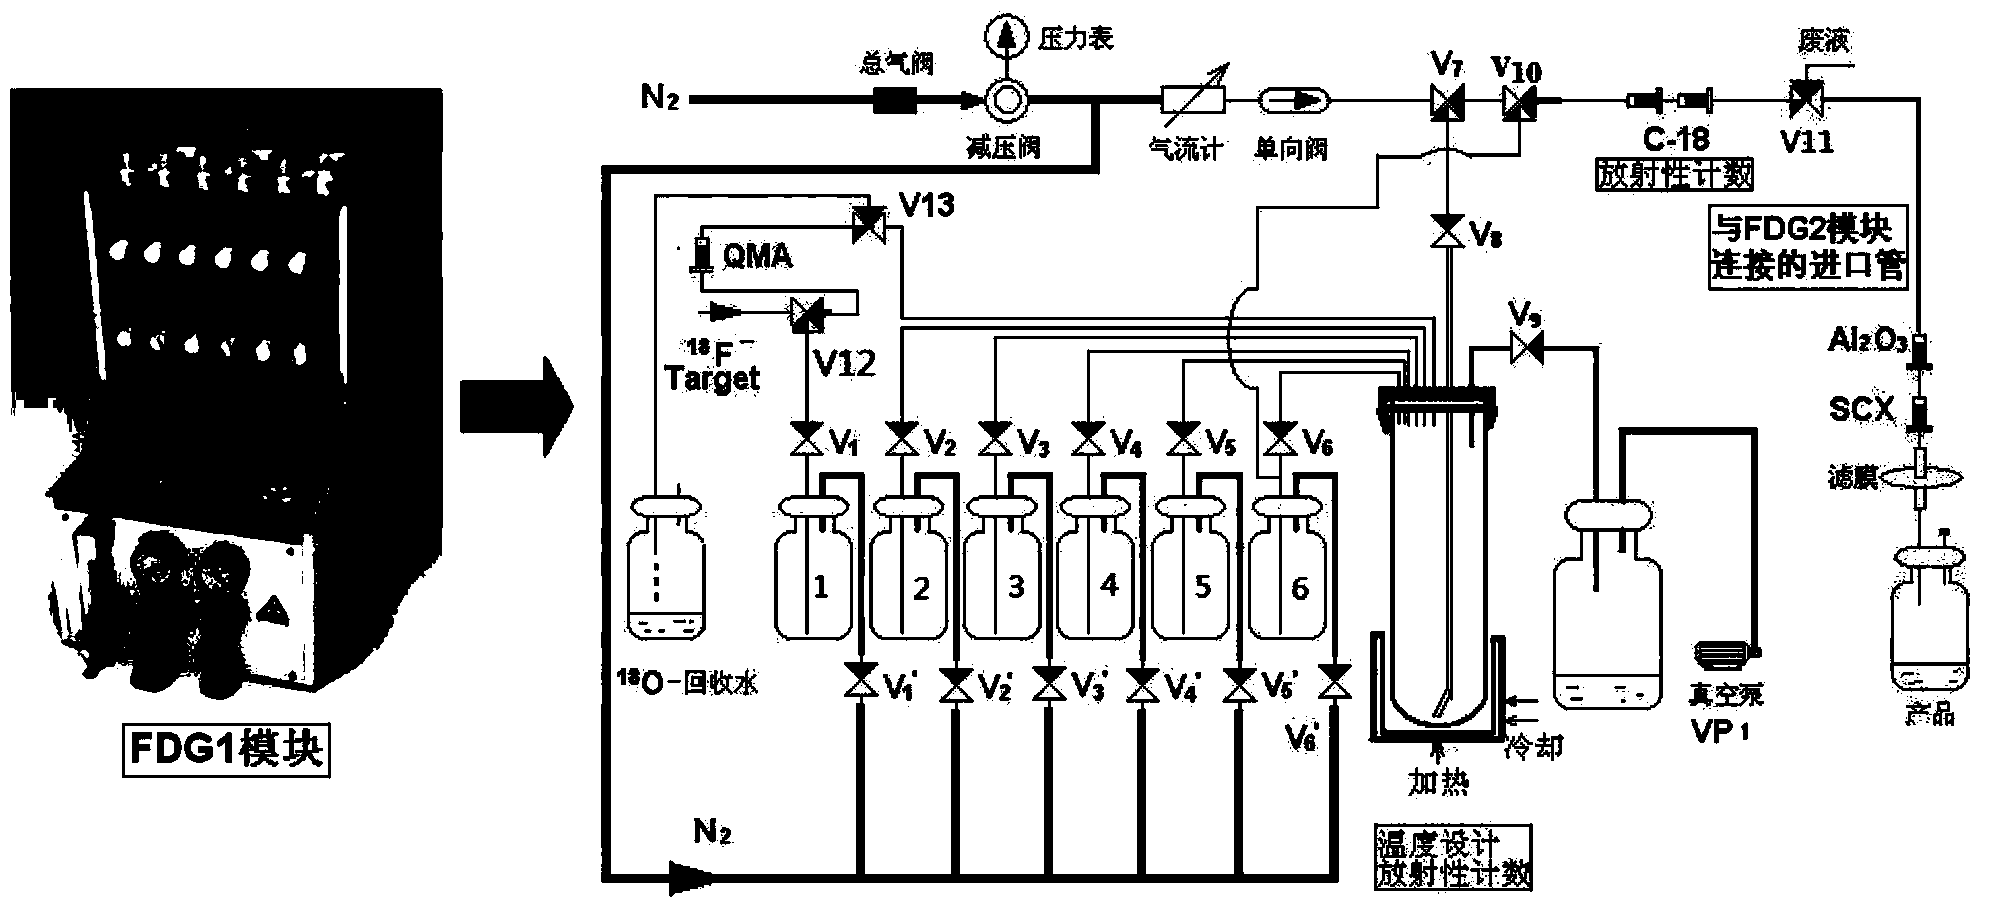 Small modular multifunctional automatic 18F labelling PET (positron emission tomography) drug synthesizer